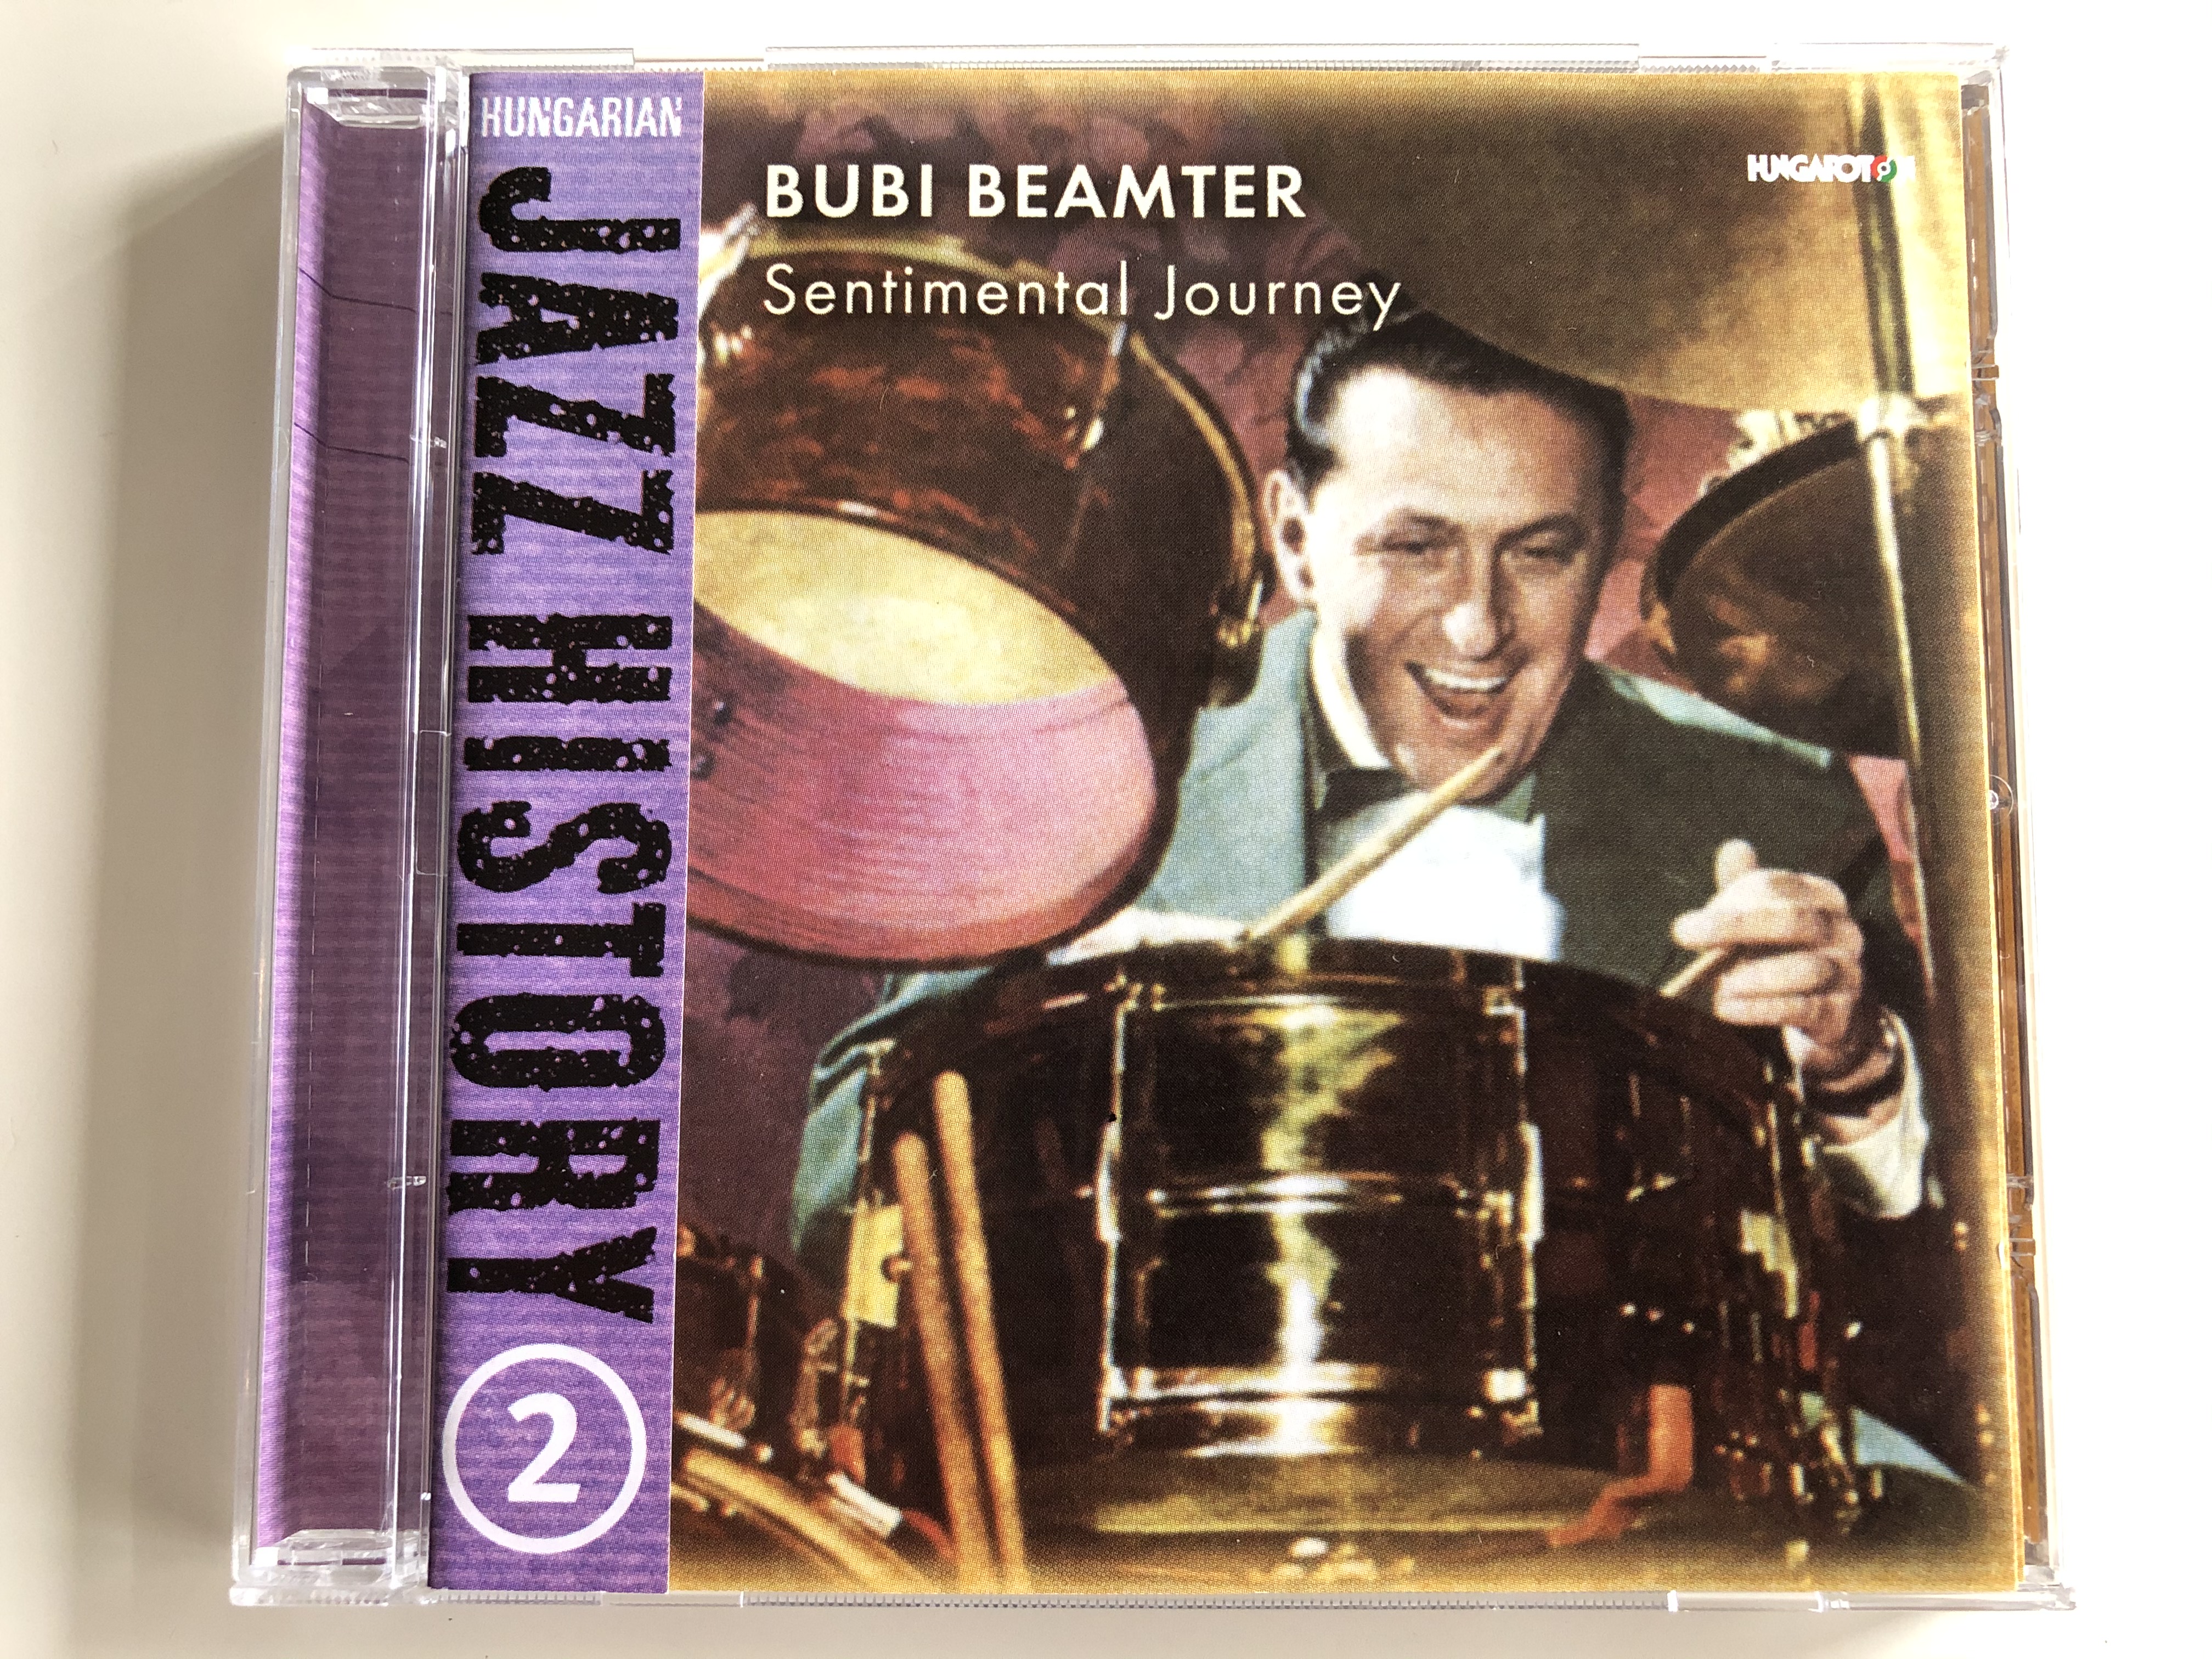 bubi-beamter-sentimental-journey-hungarian-jazz-history-2-hungaroton-audio-cd-2000-hcd-71009-1-.jpg